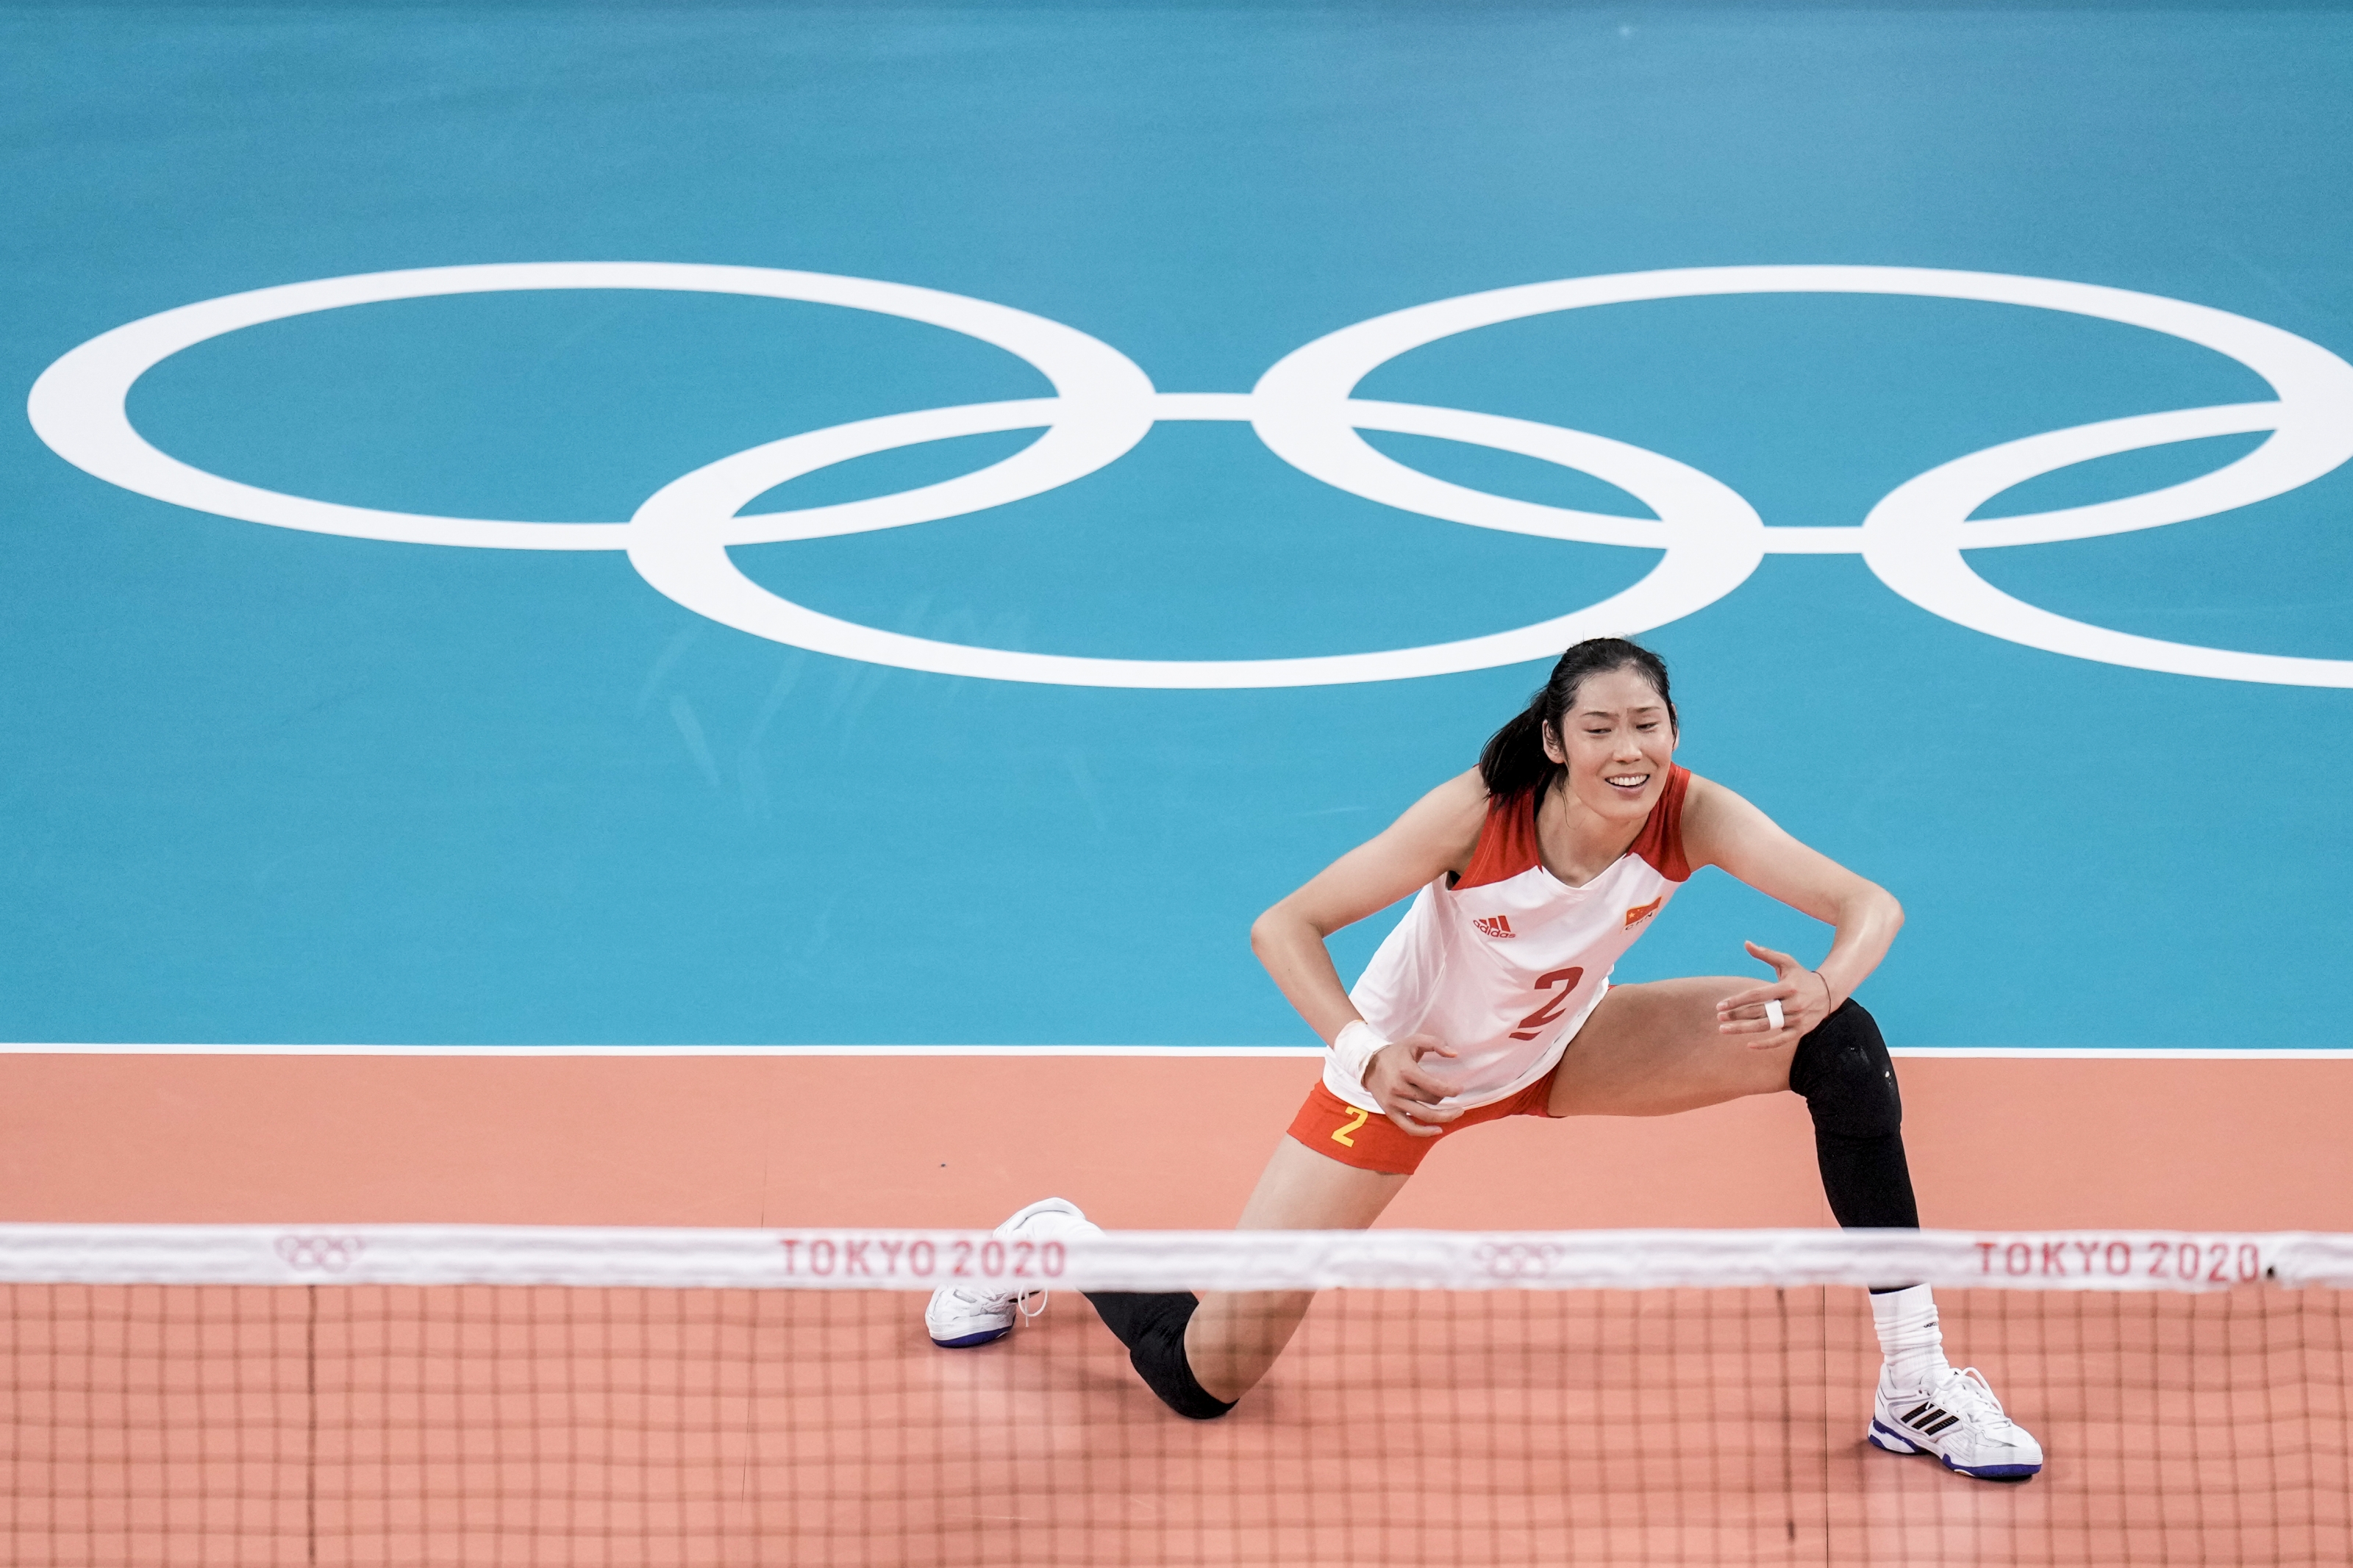 La jugadora de voleibol de China quedó en tercer lugar